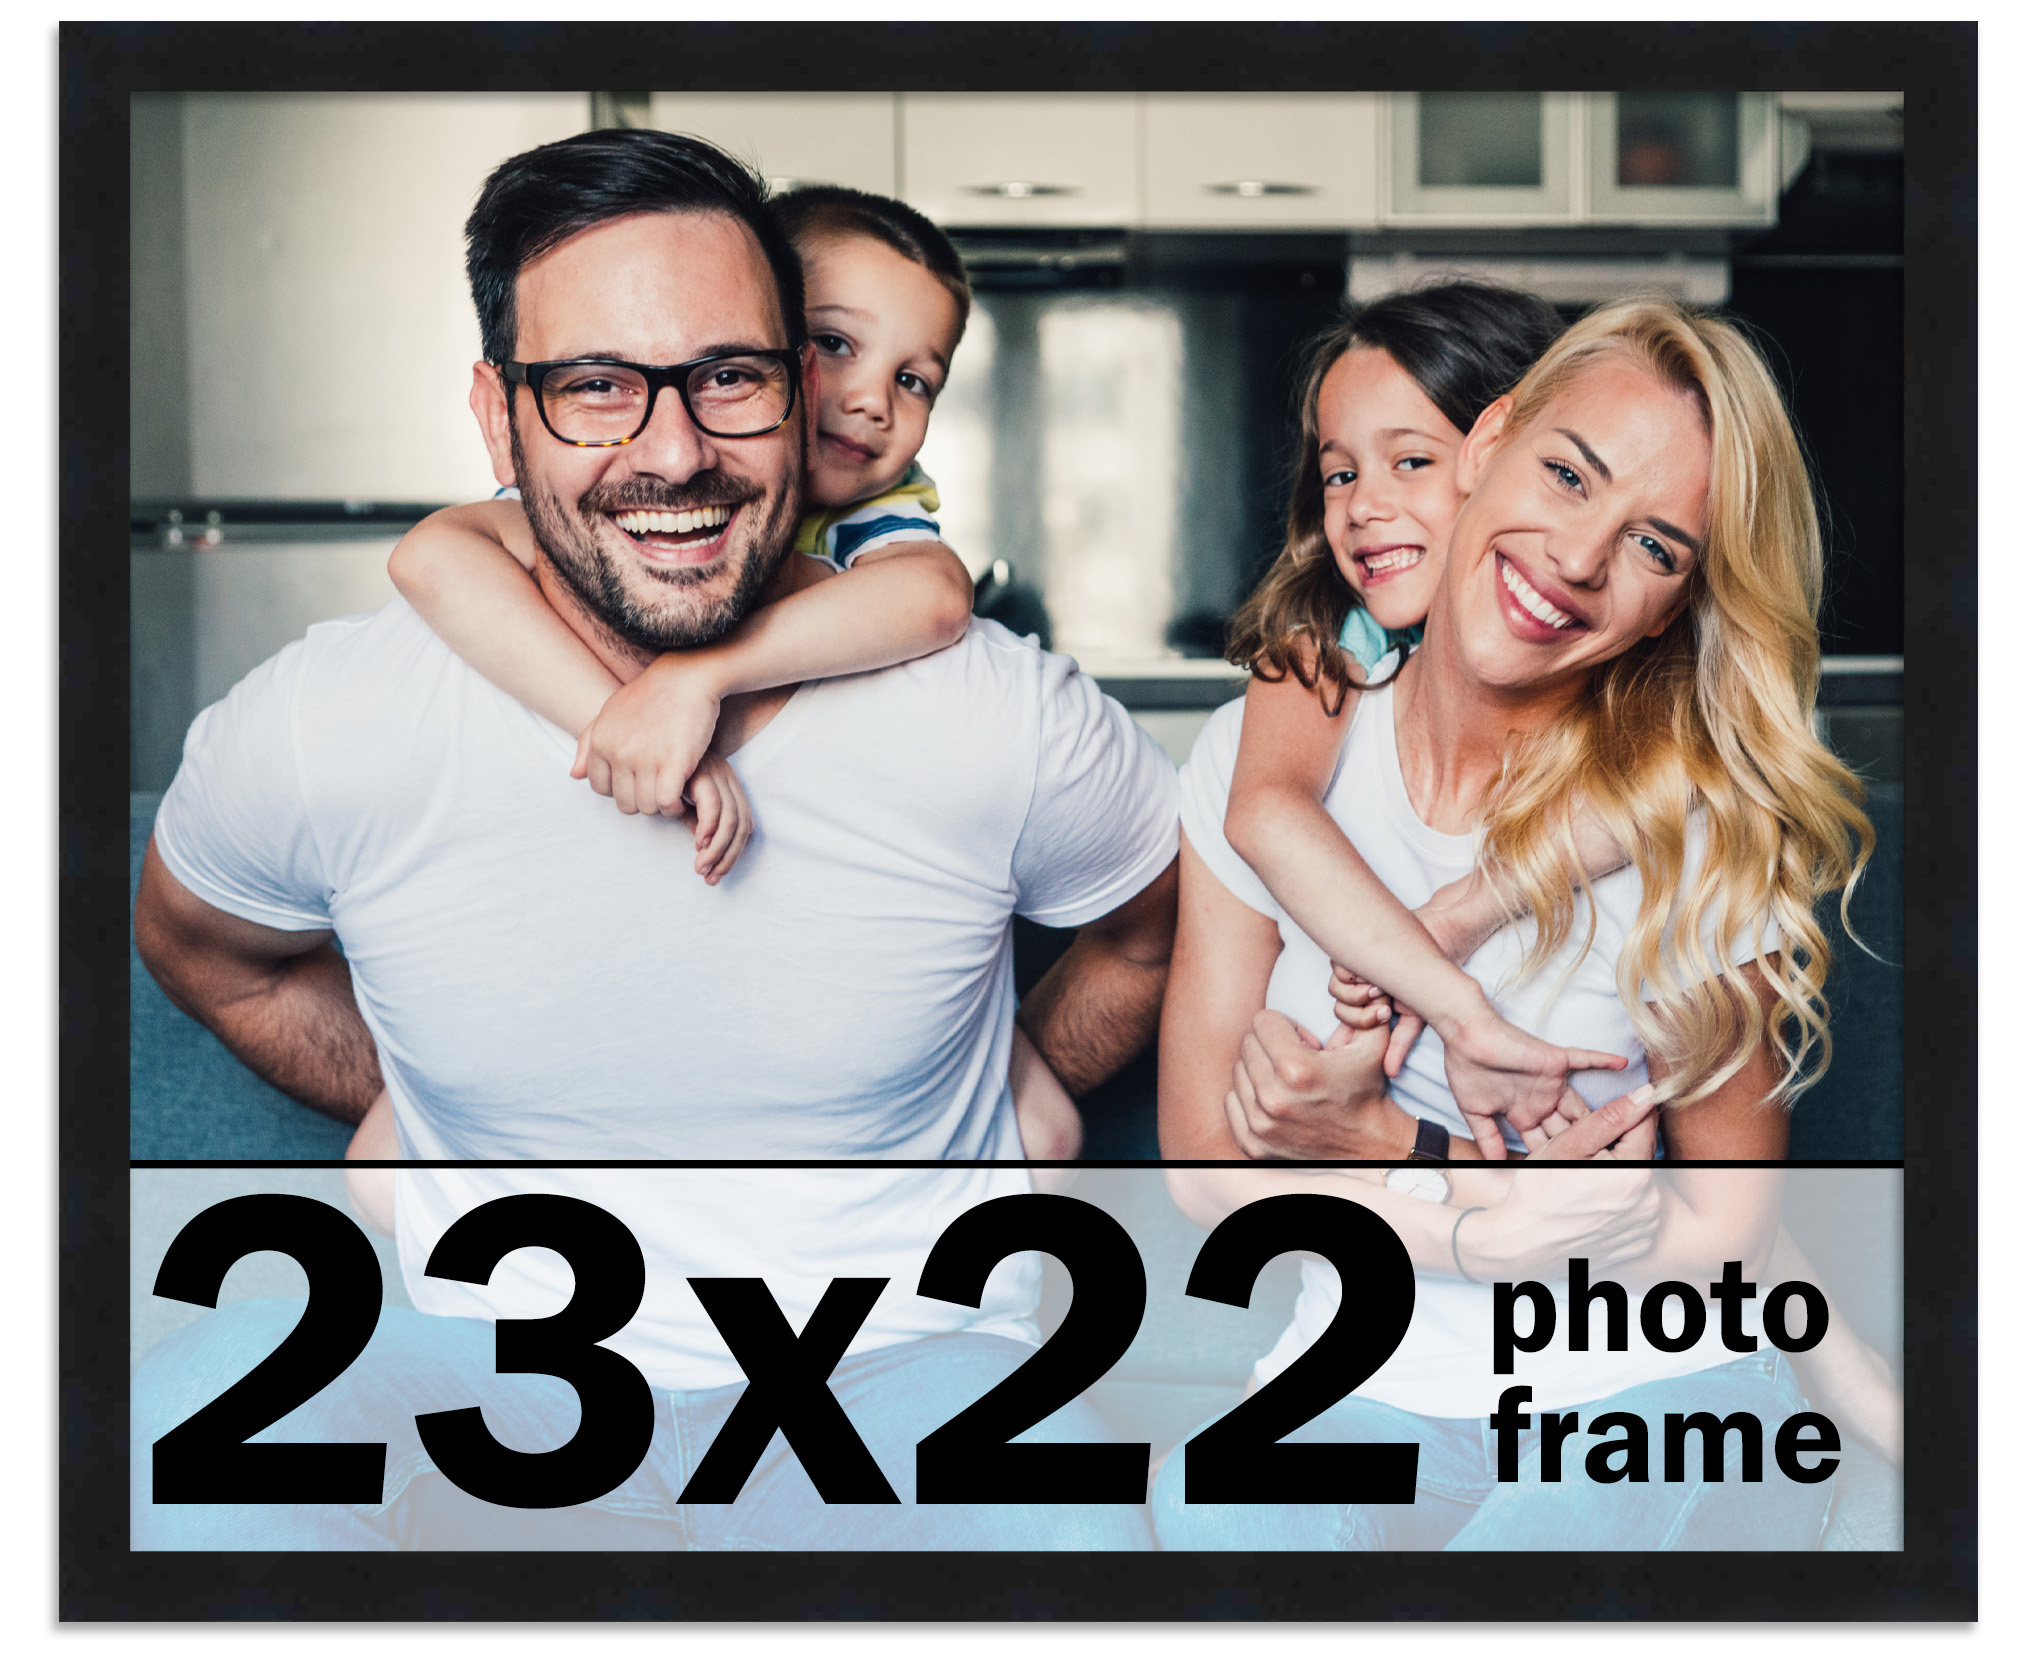 CustomPictureFrames.com 23x22 Frame Black Picture Frame - Complete Modern Photo Frame Includes UV Acrylic Shatter Guard Front, Acid Free Foam Backing